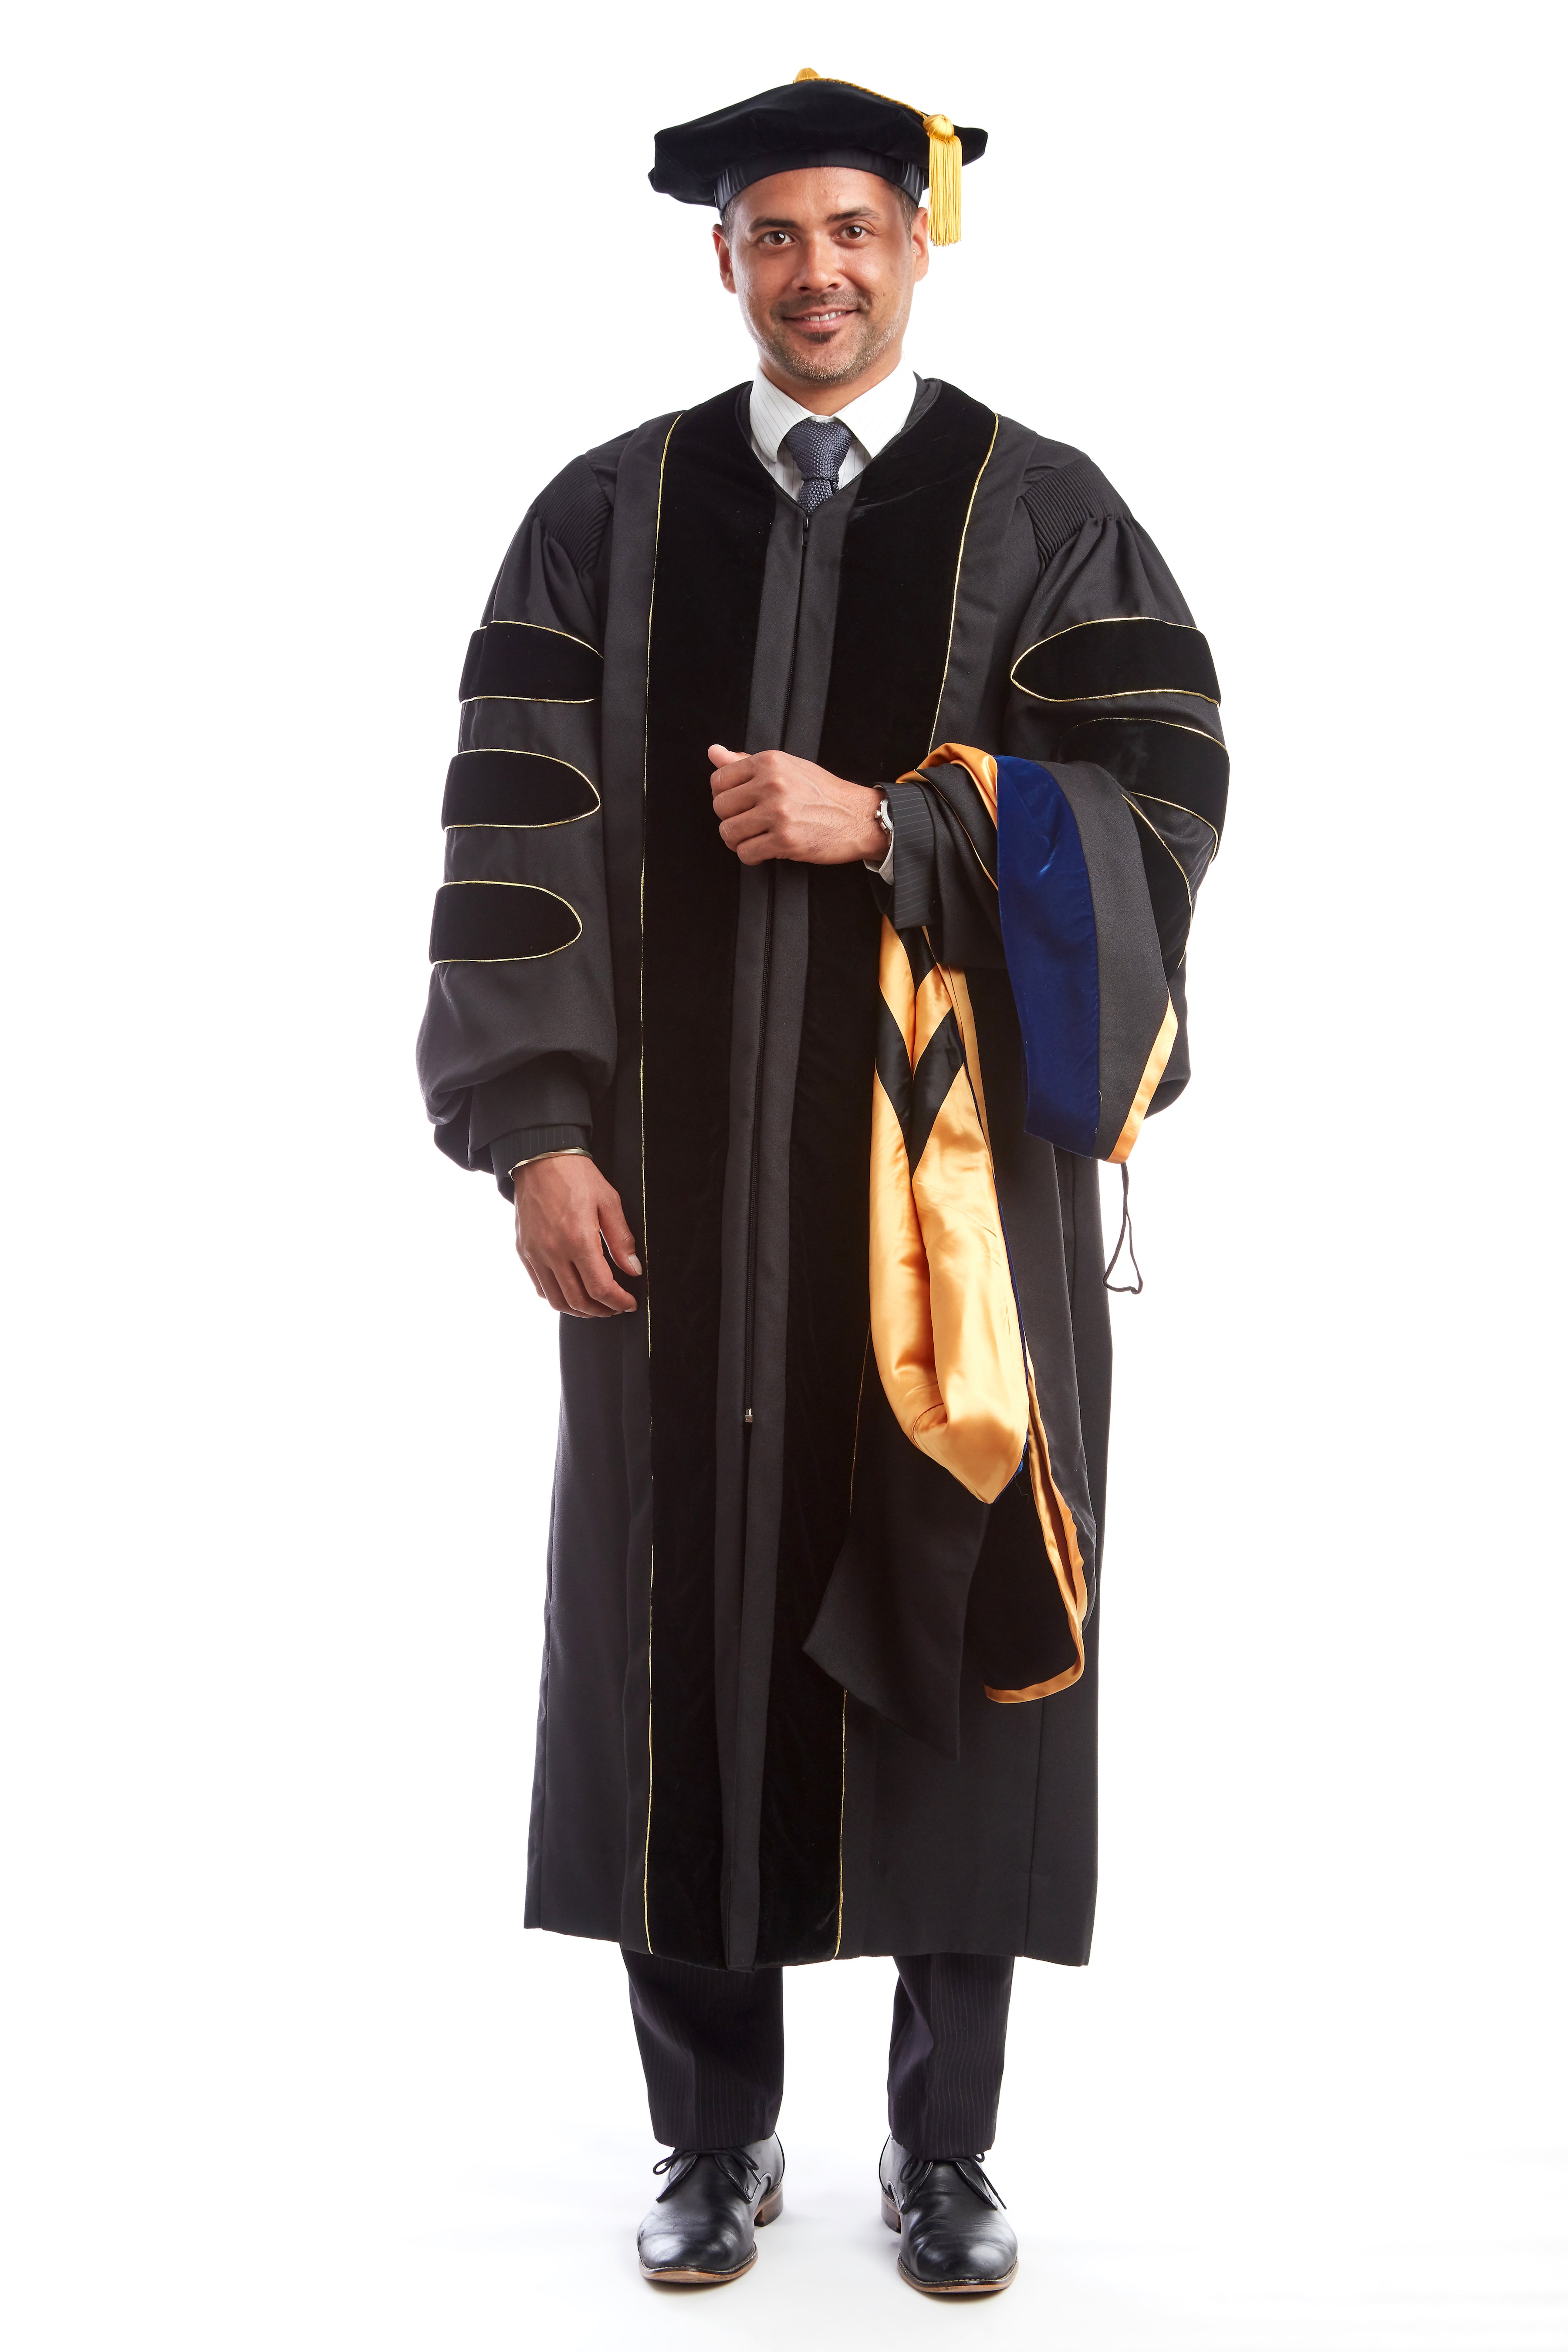 Herff Jones Master Degree Cap and Gown Rental Package | University Book  Store